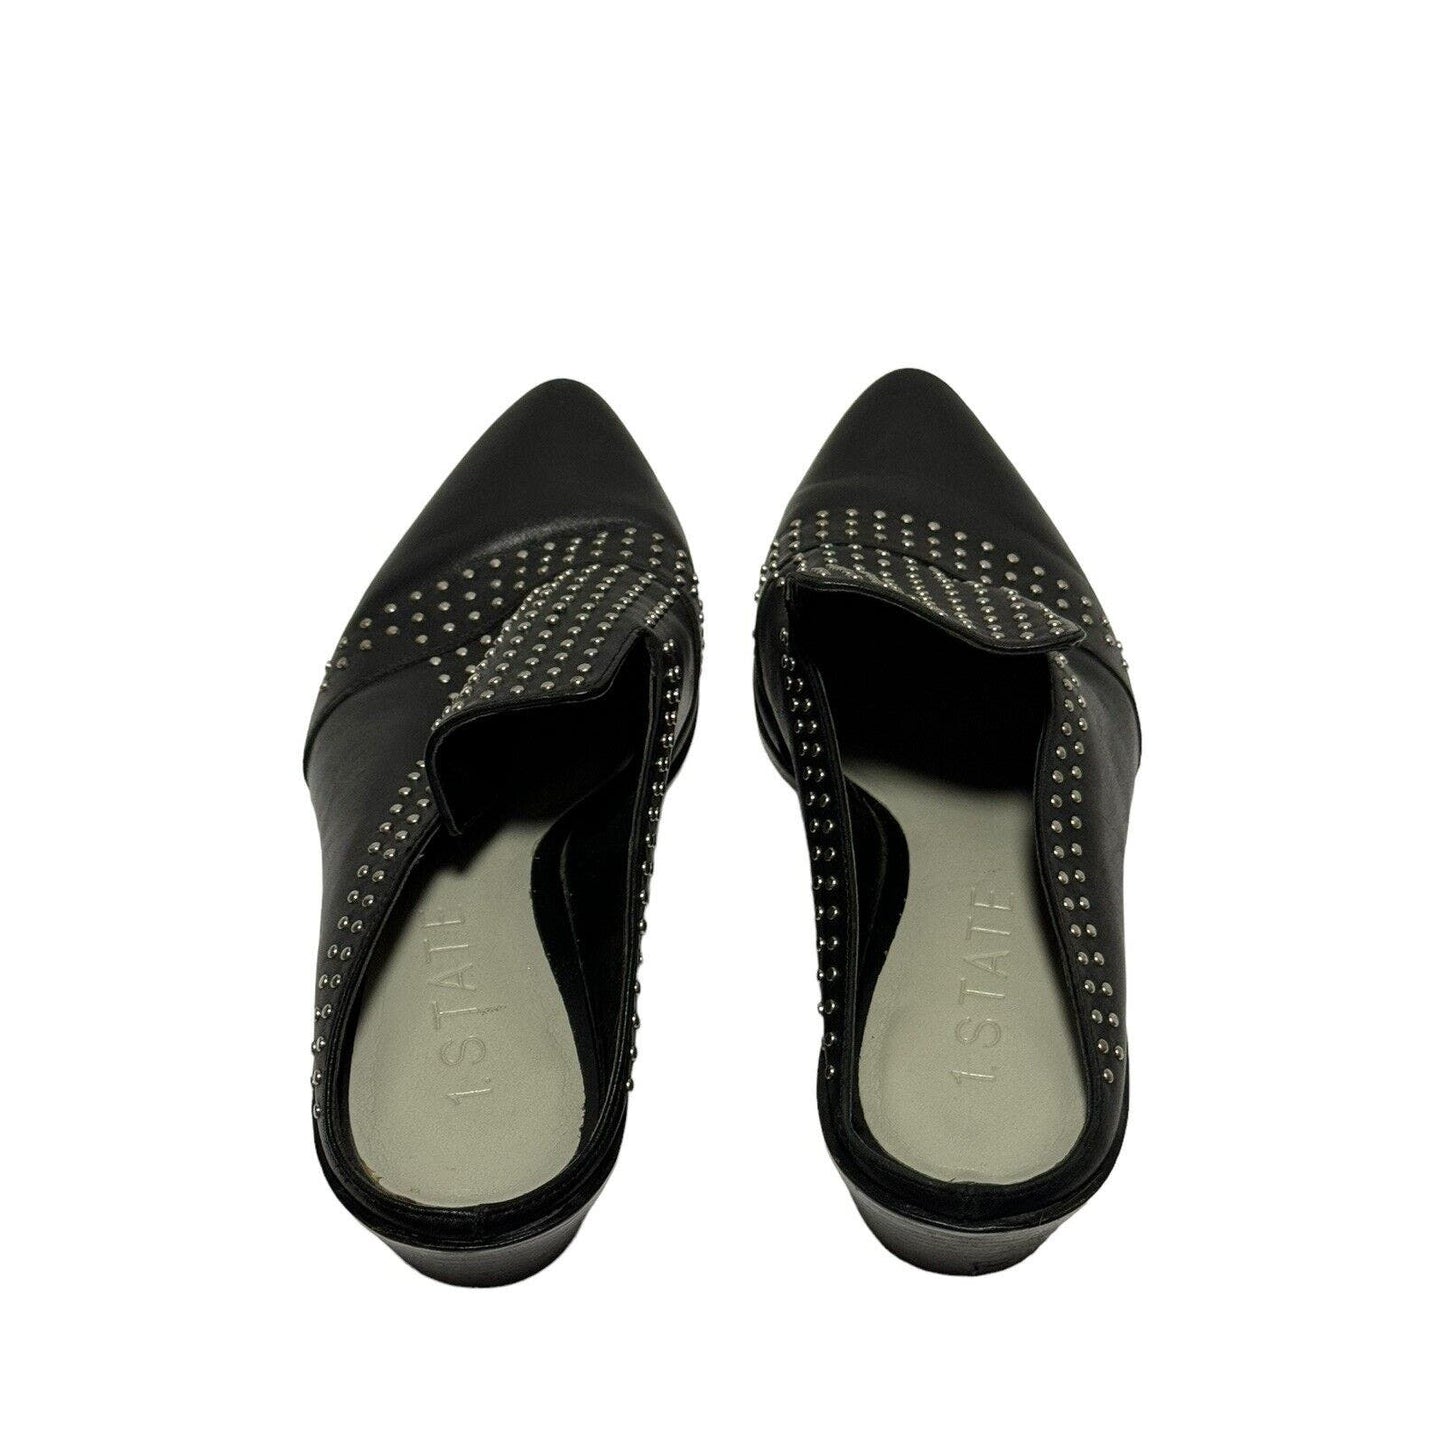 1 State Lon Studded Black Slip On Mules Size 8.5 M